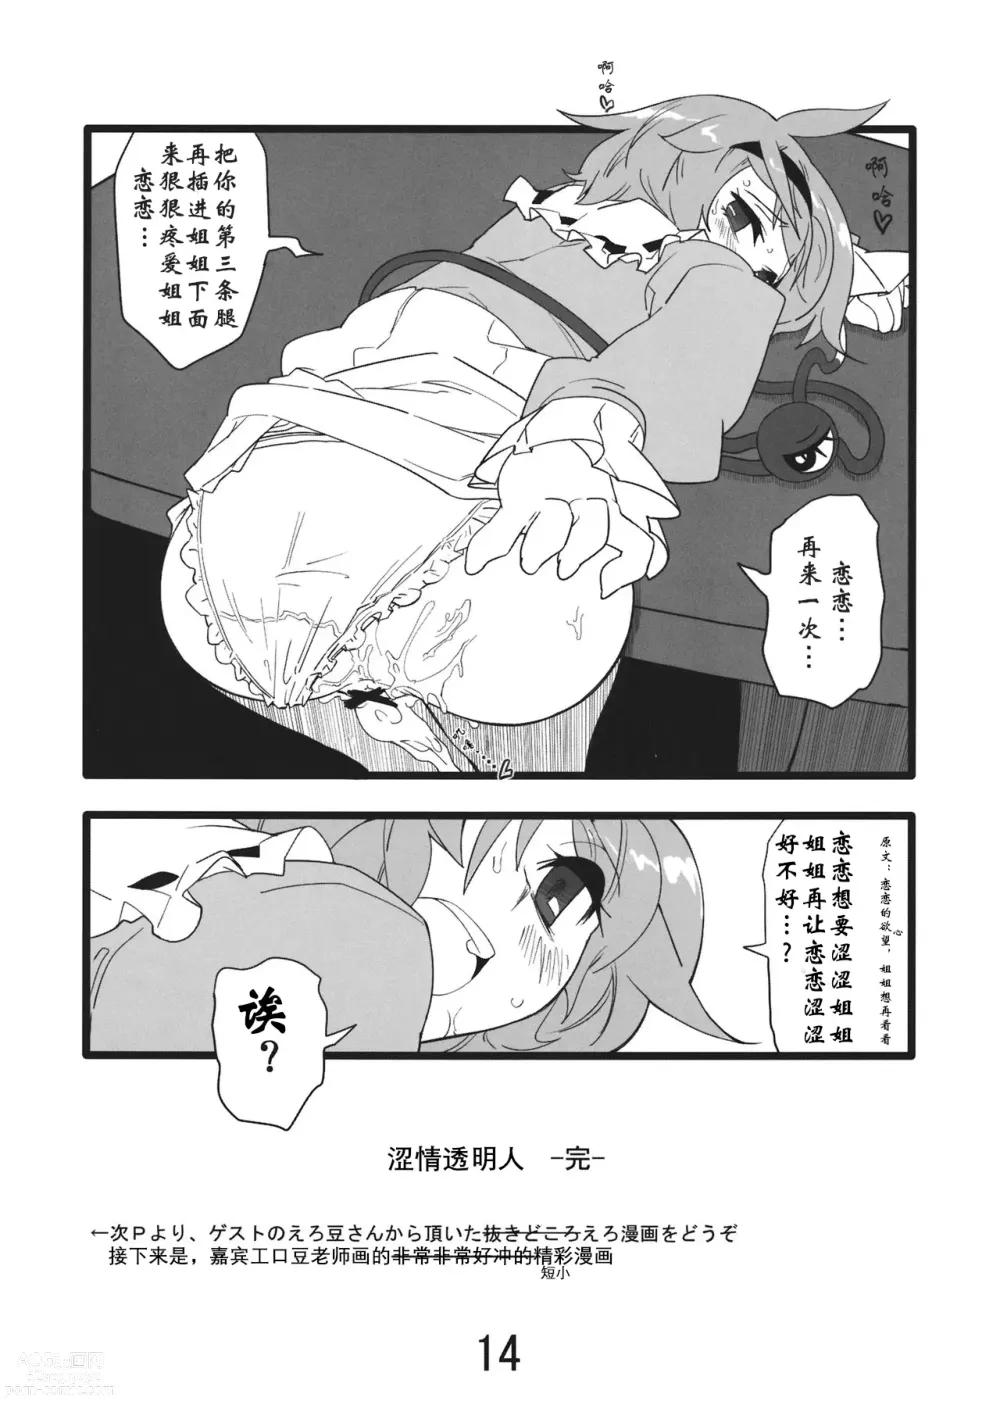 Page 15 of doujinshi 涩情透明人